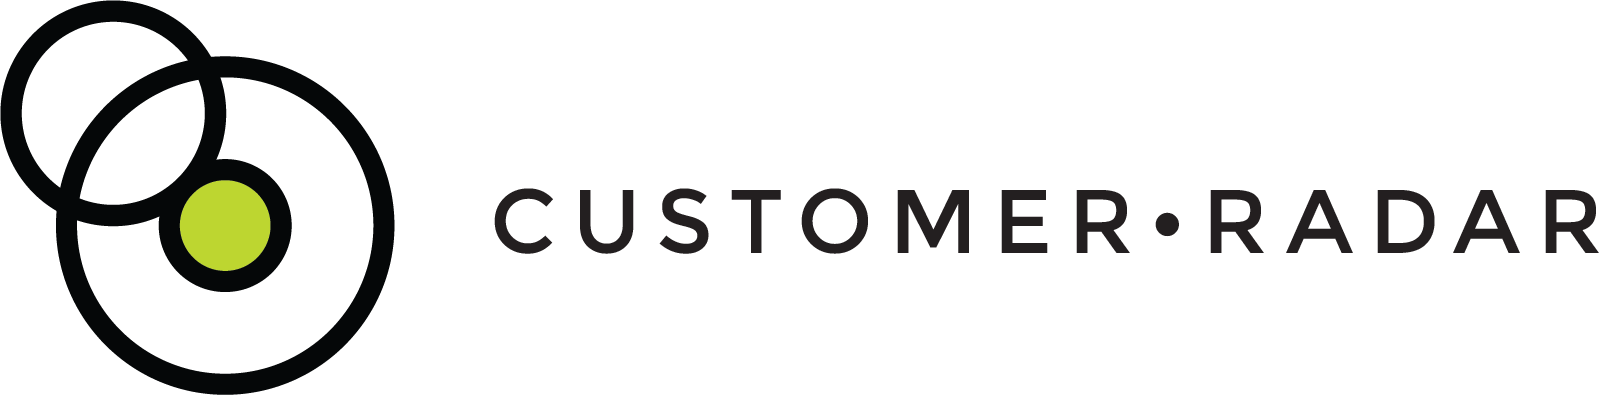 Customer Radar logo